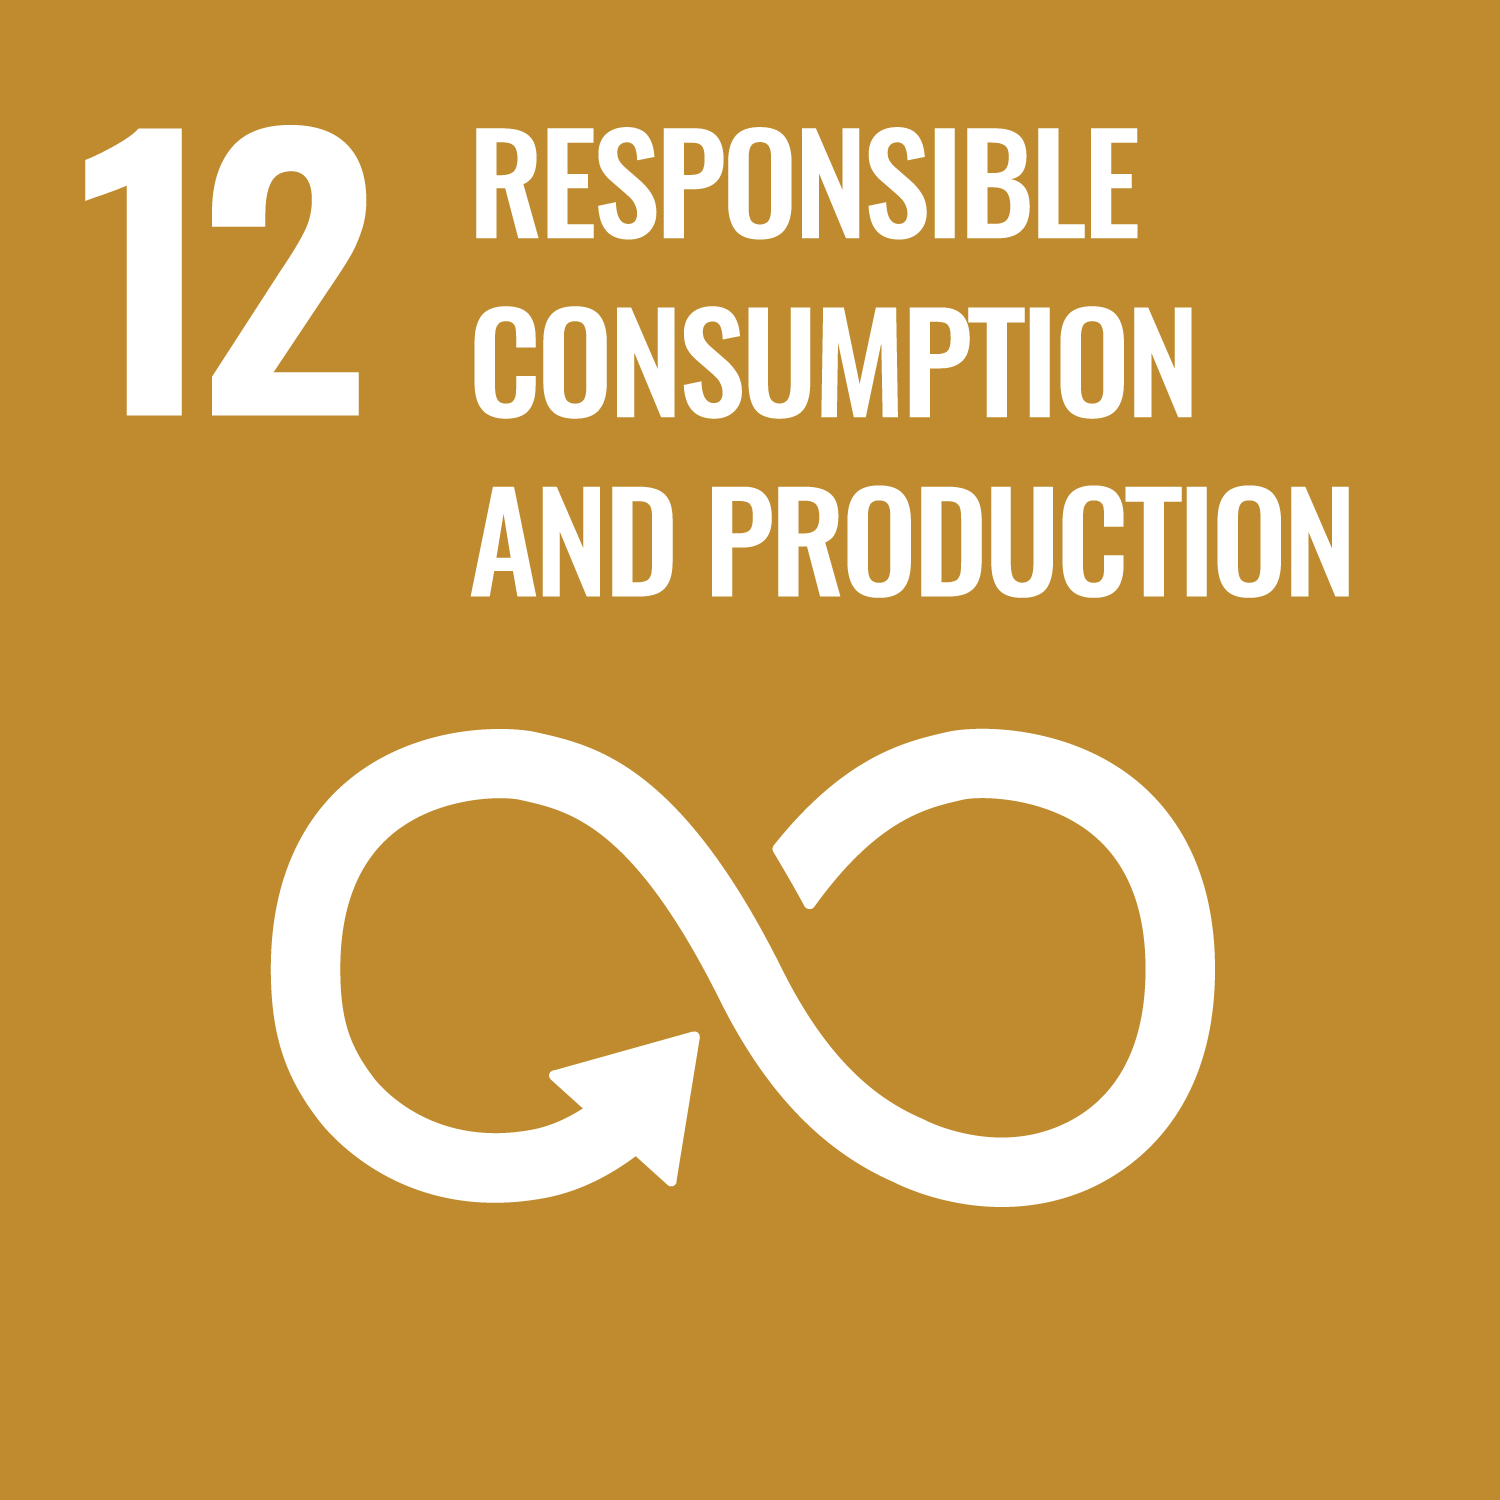 12 - Responsible Consumption